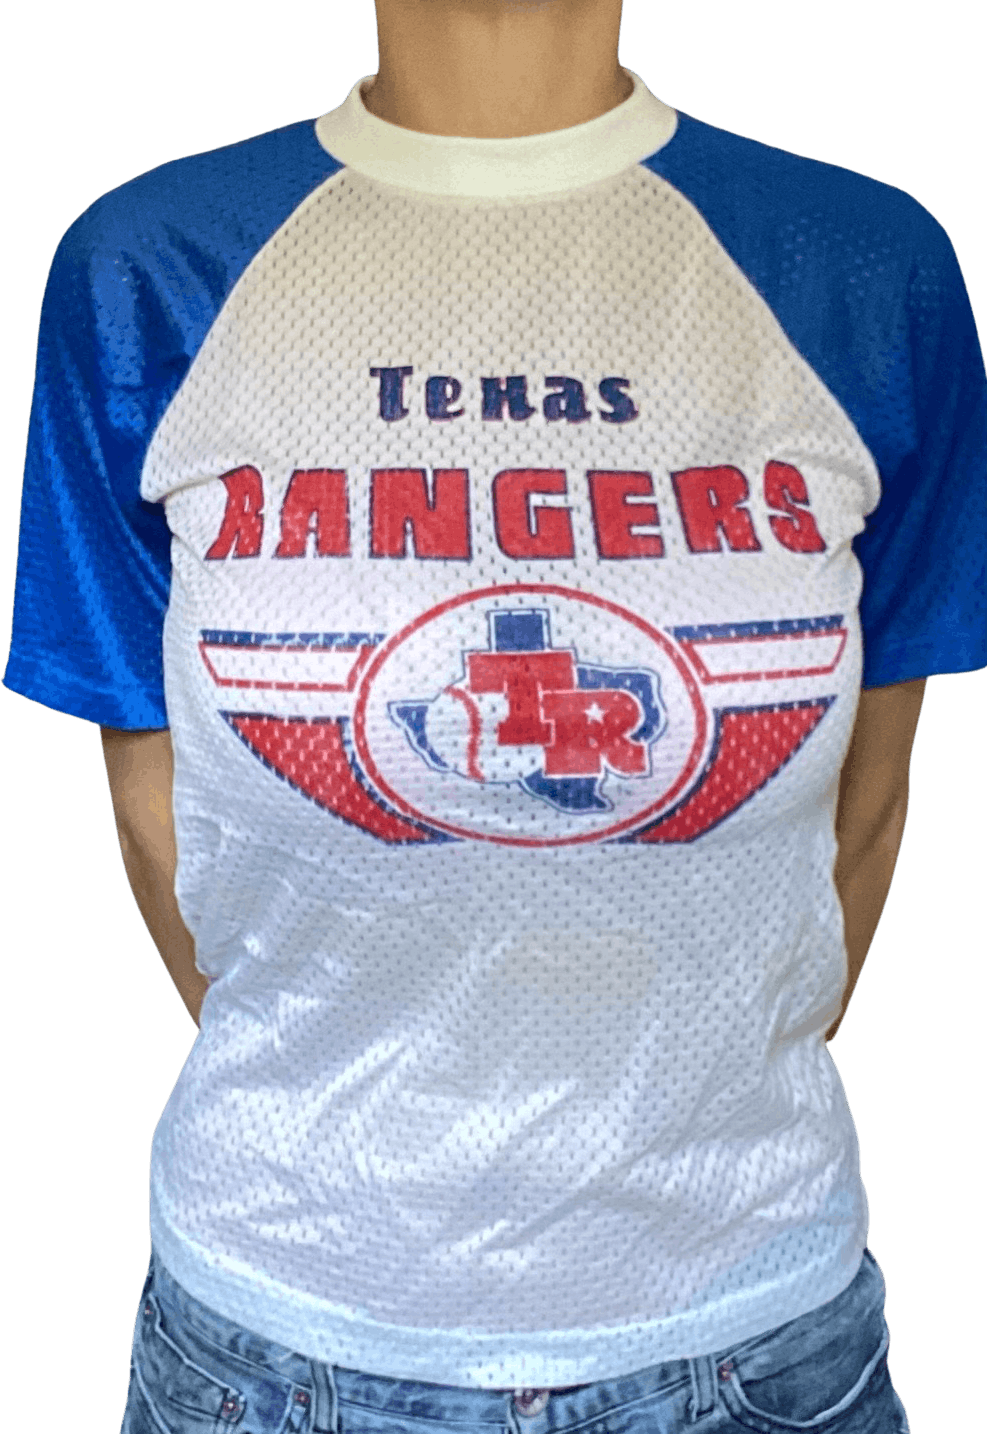 70’s Unisex Texas Rangers Baseball Mesh Shirt. by Texas Rangers